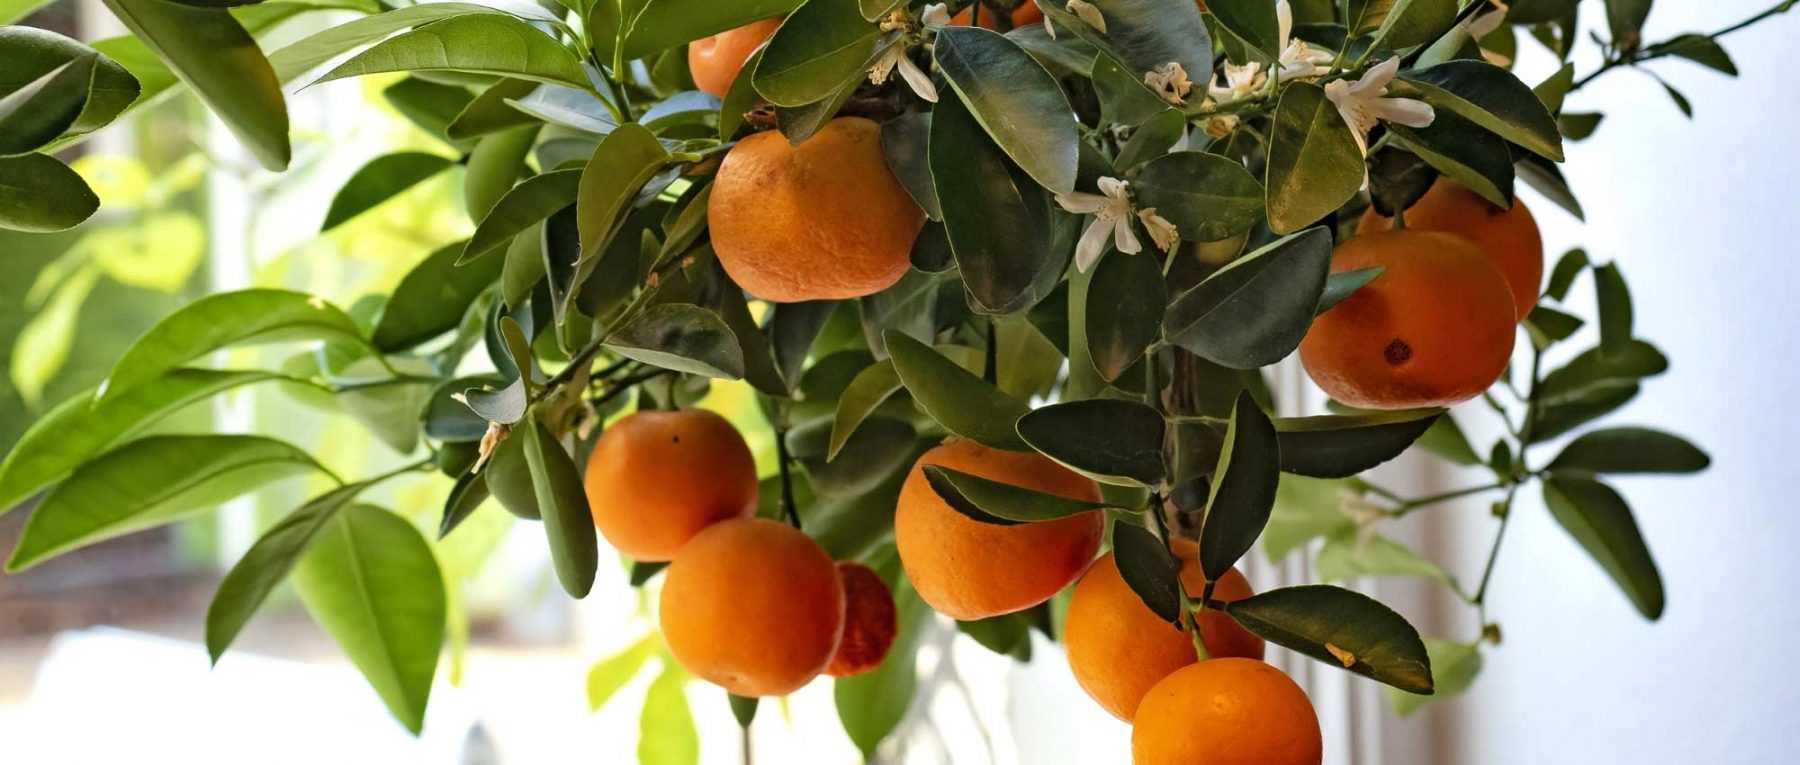 Engrais naturel pour Agrumes (Citronniers, orangers, kumquats